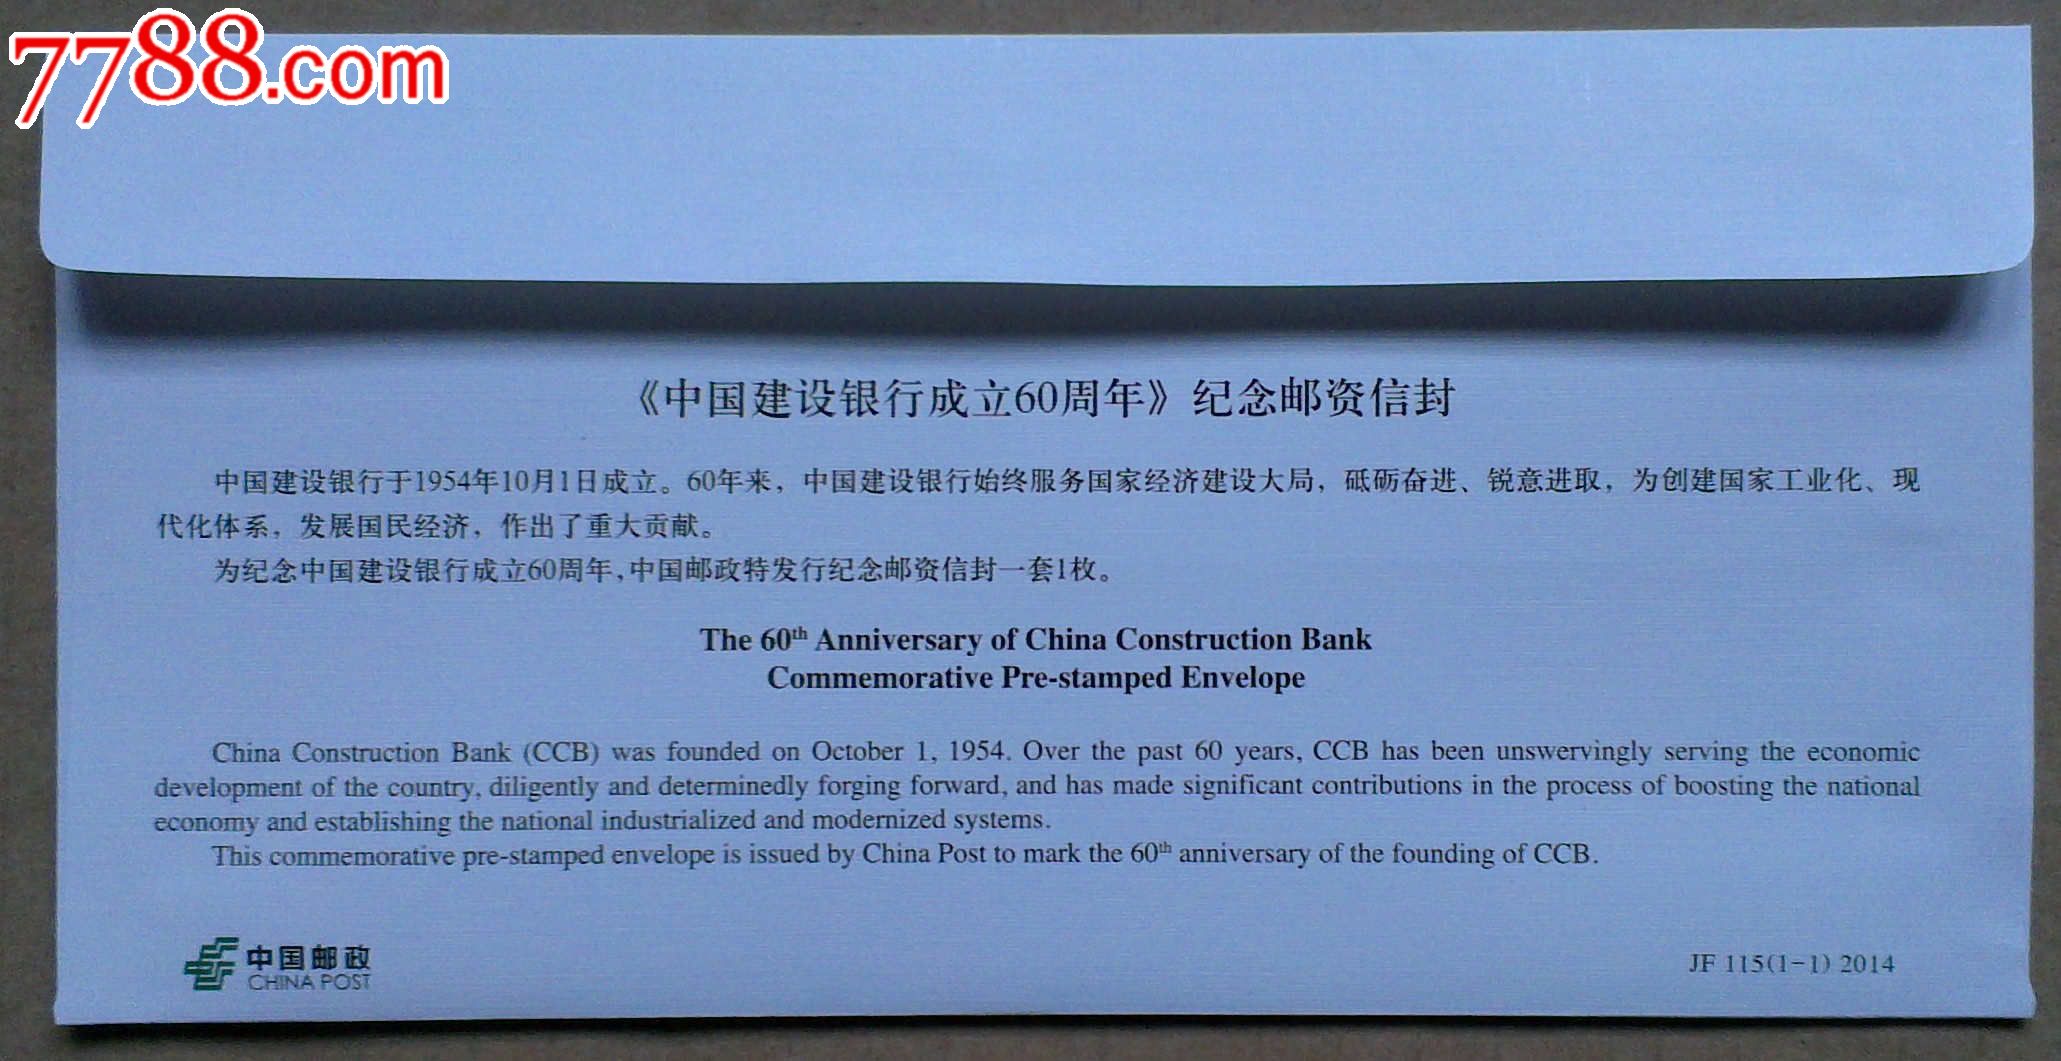 JF115《中国建设银行成立60周年》纪念邮资封